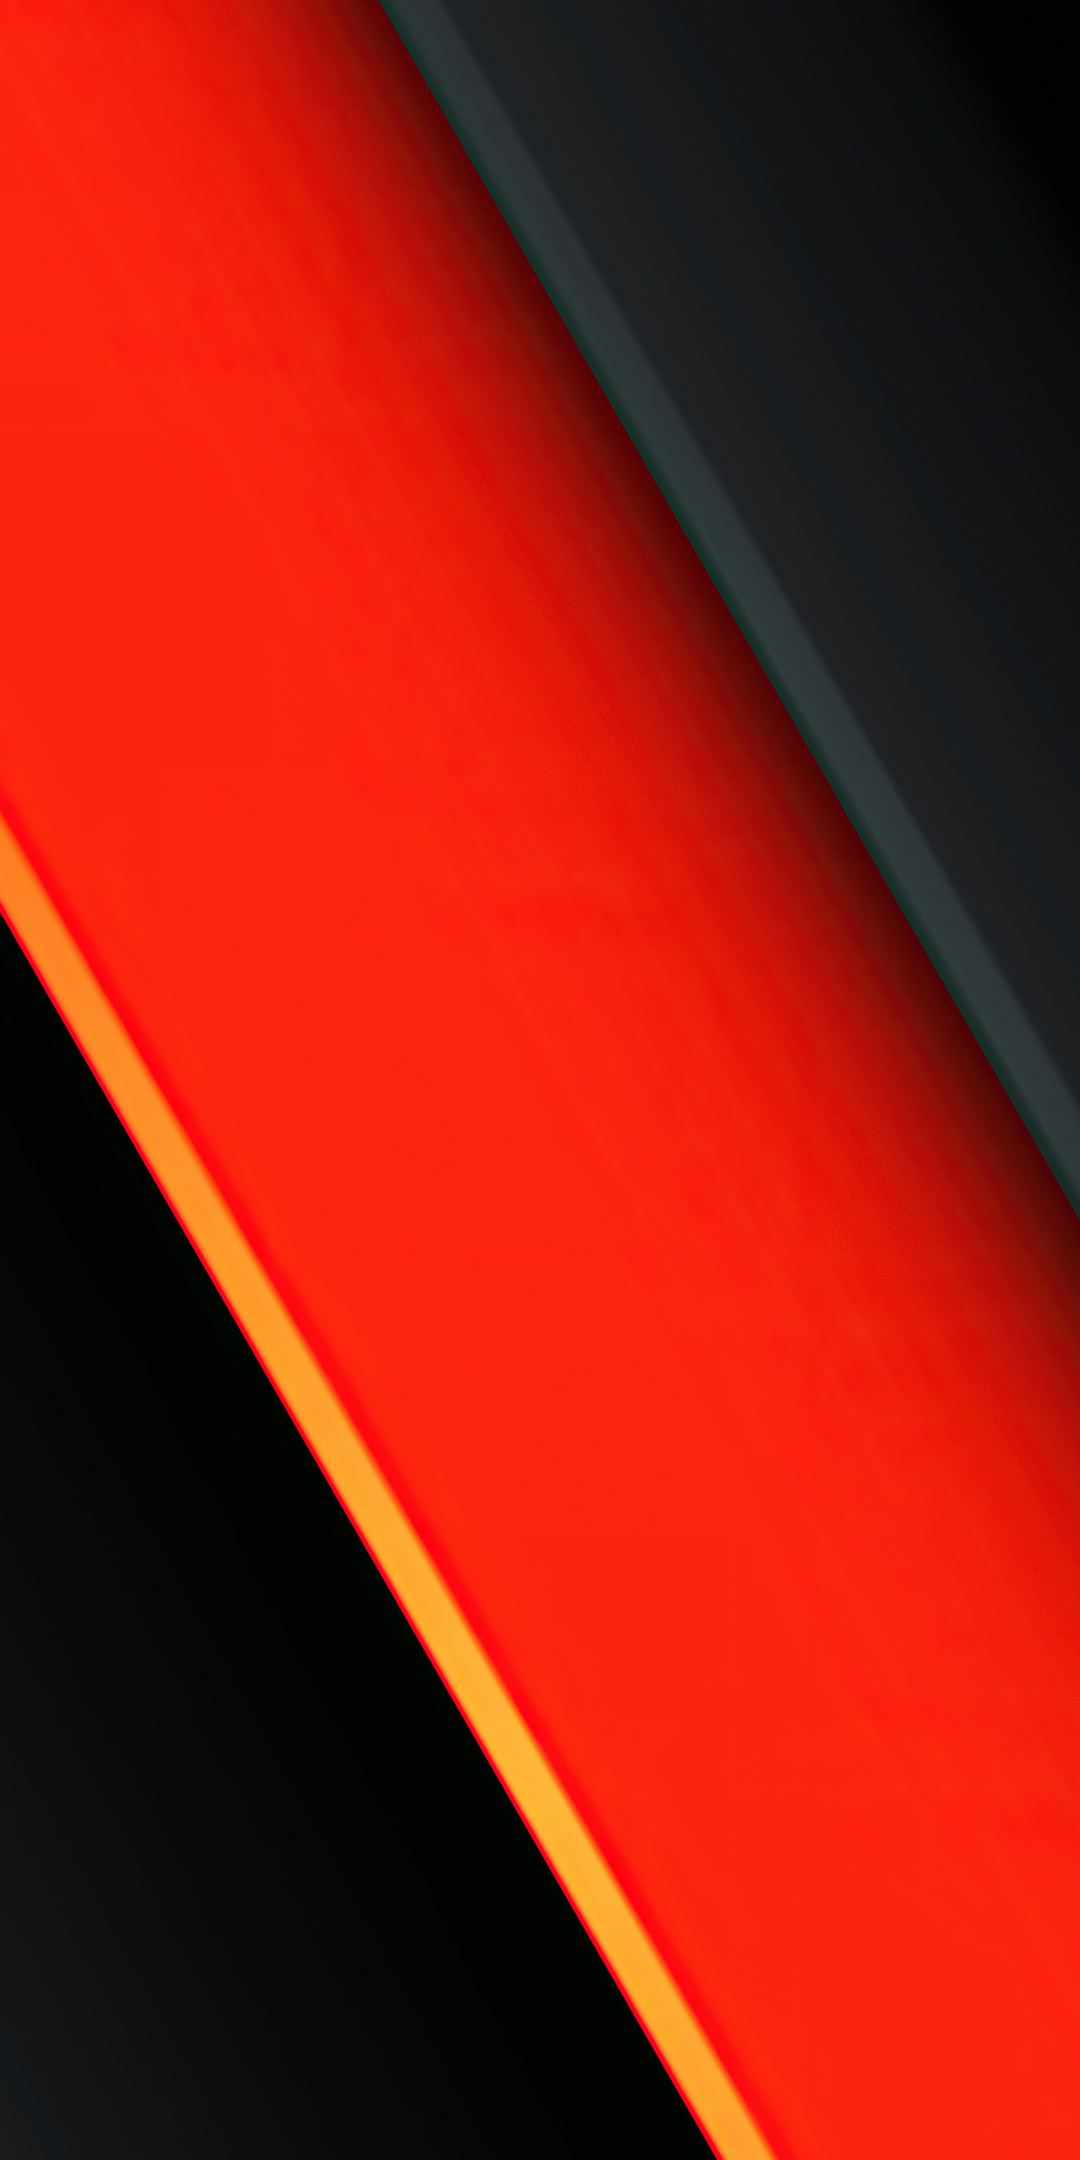 Orange-red & black stripes, abstract, 1080x2160 wallpaper